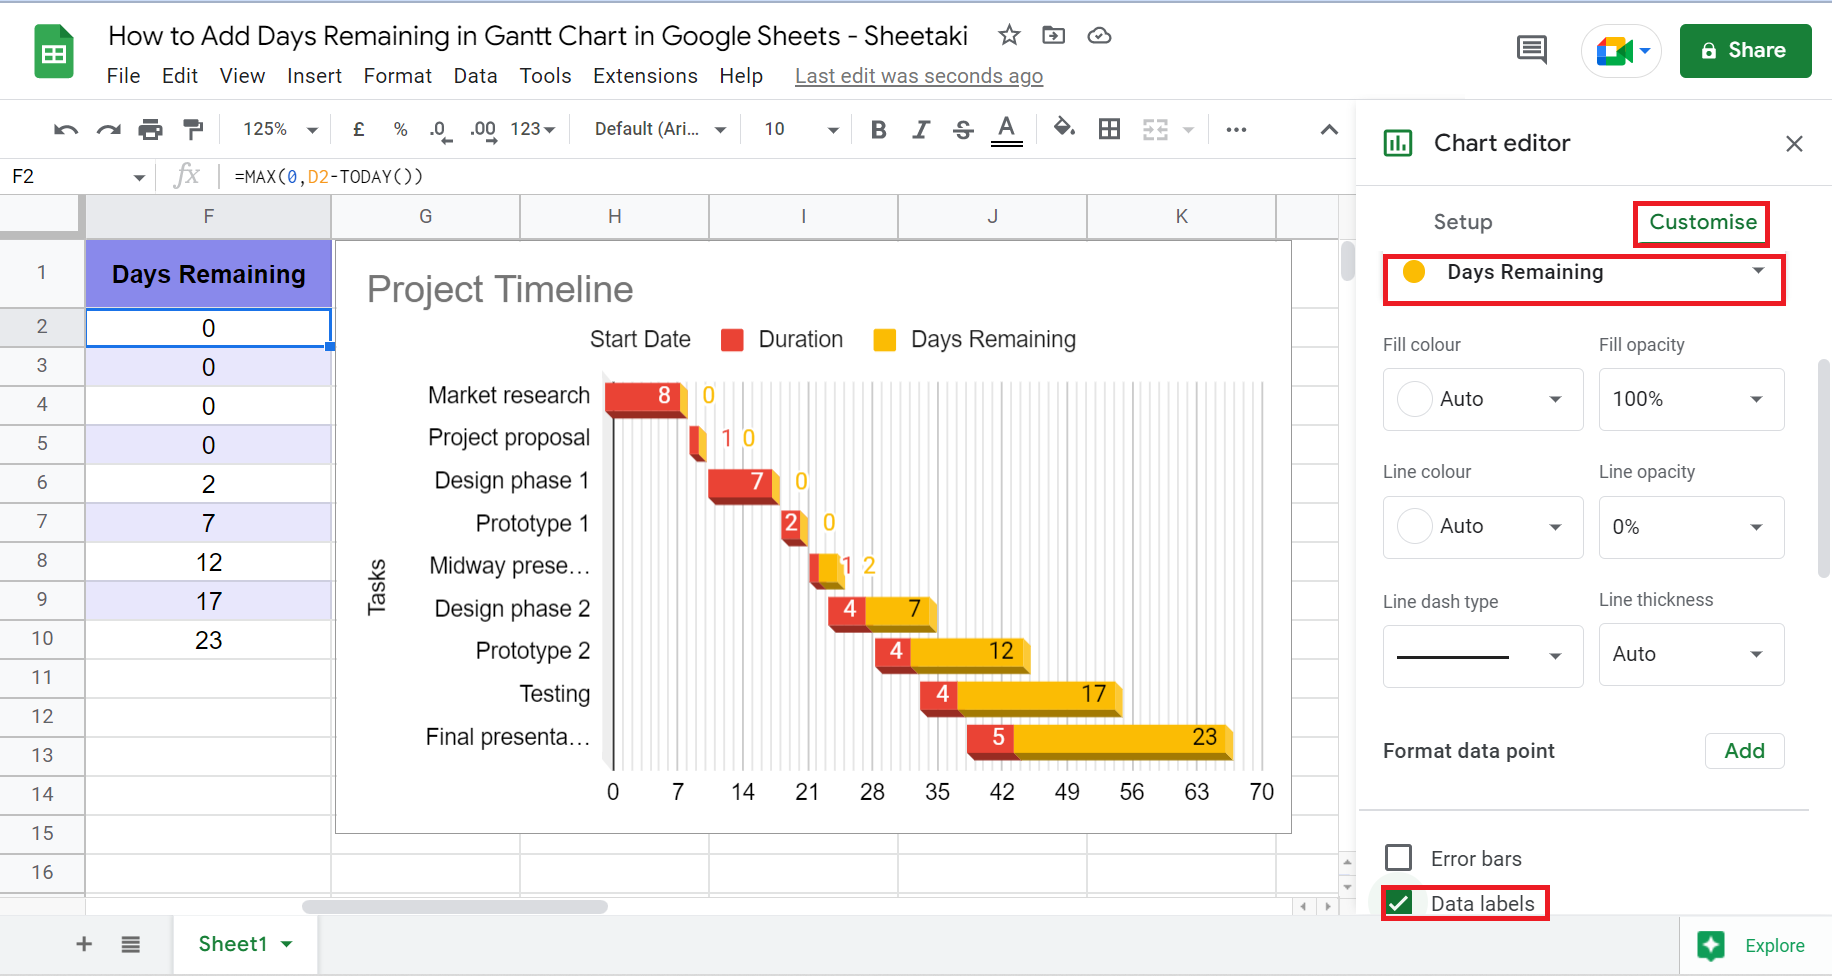 Customizing the Gantt chart in Google Sheets